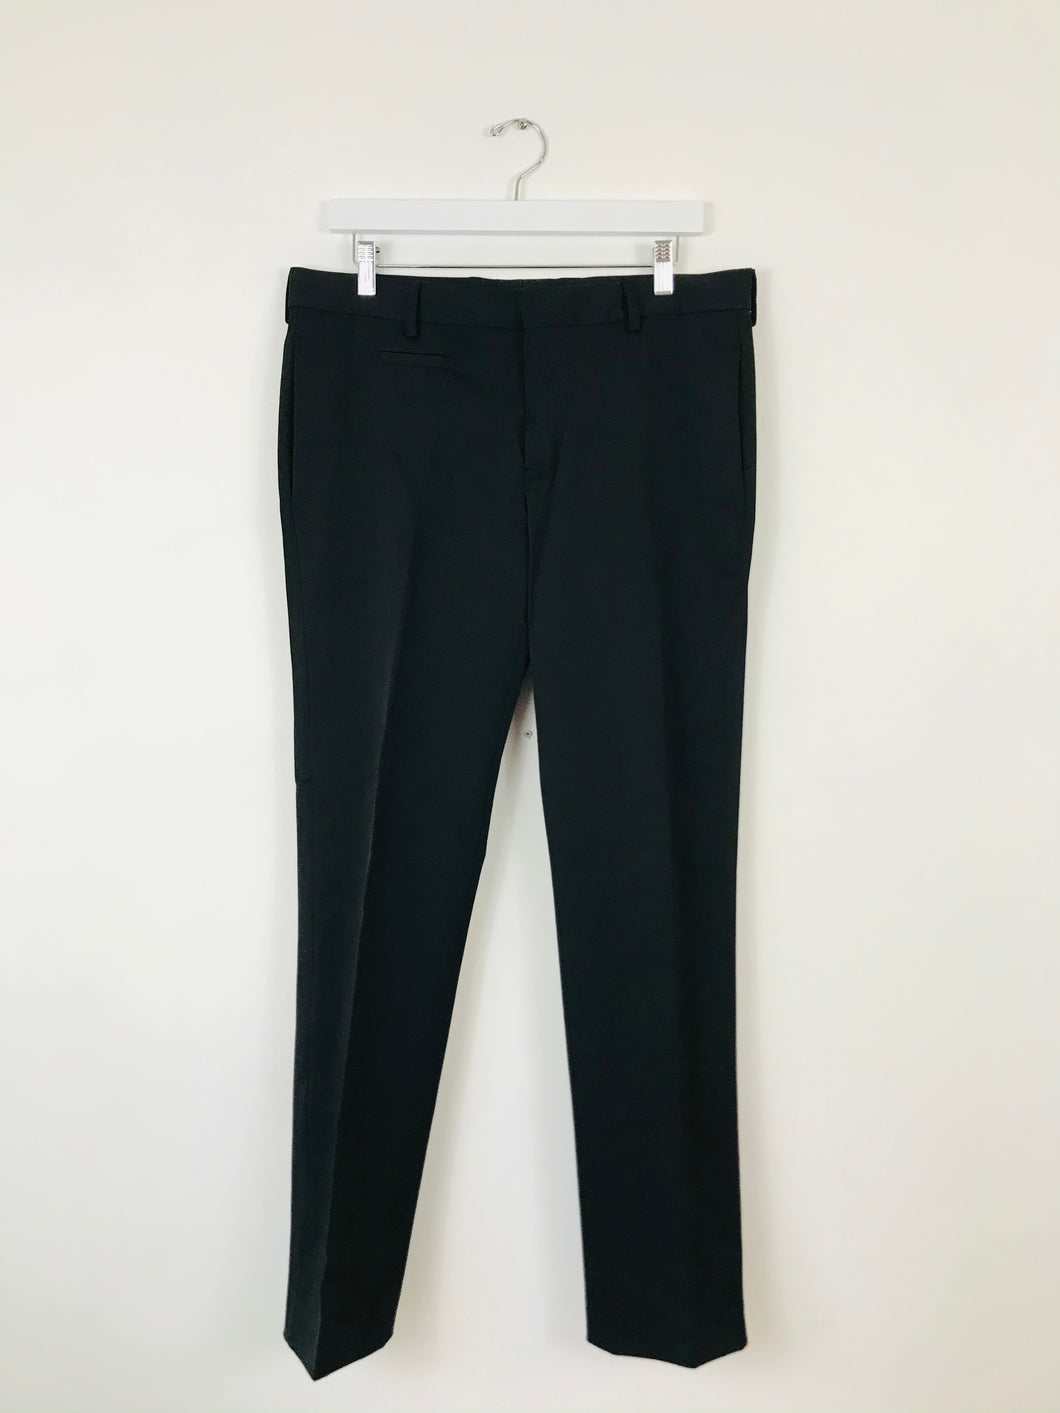 Zara Man Men’s Formal Suit Trousers | 42 UK32 | Black